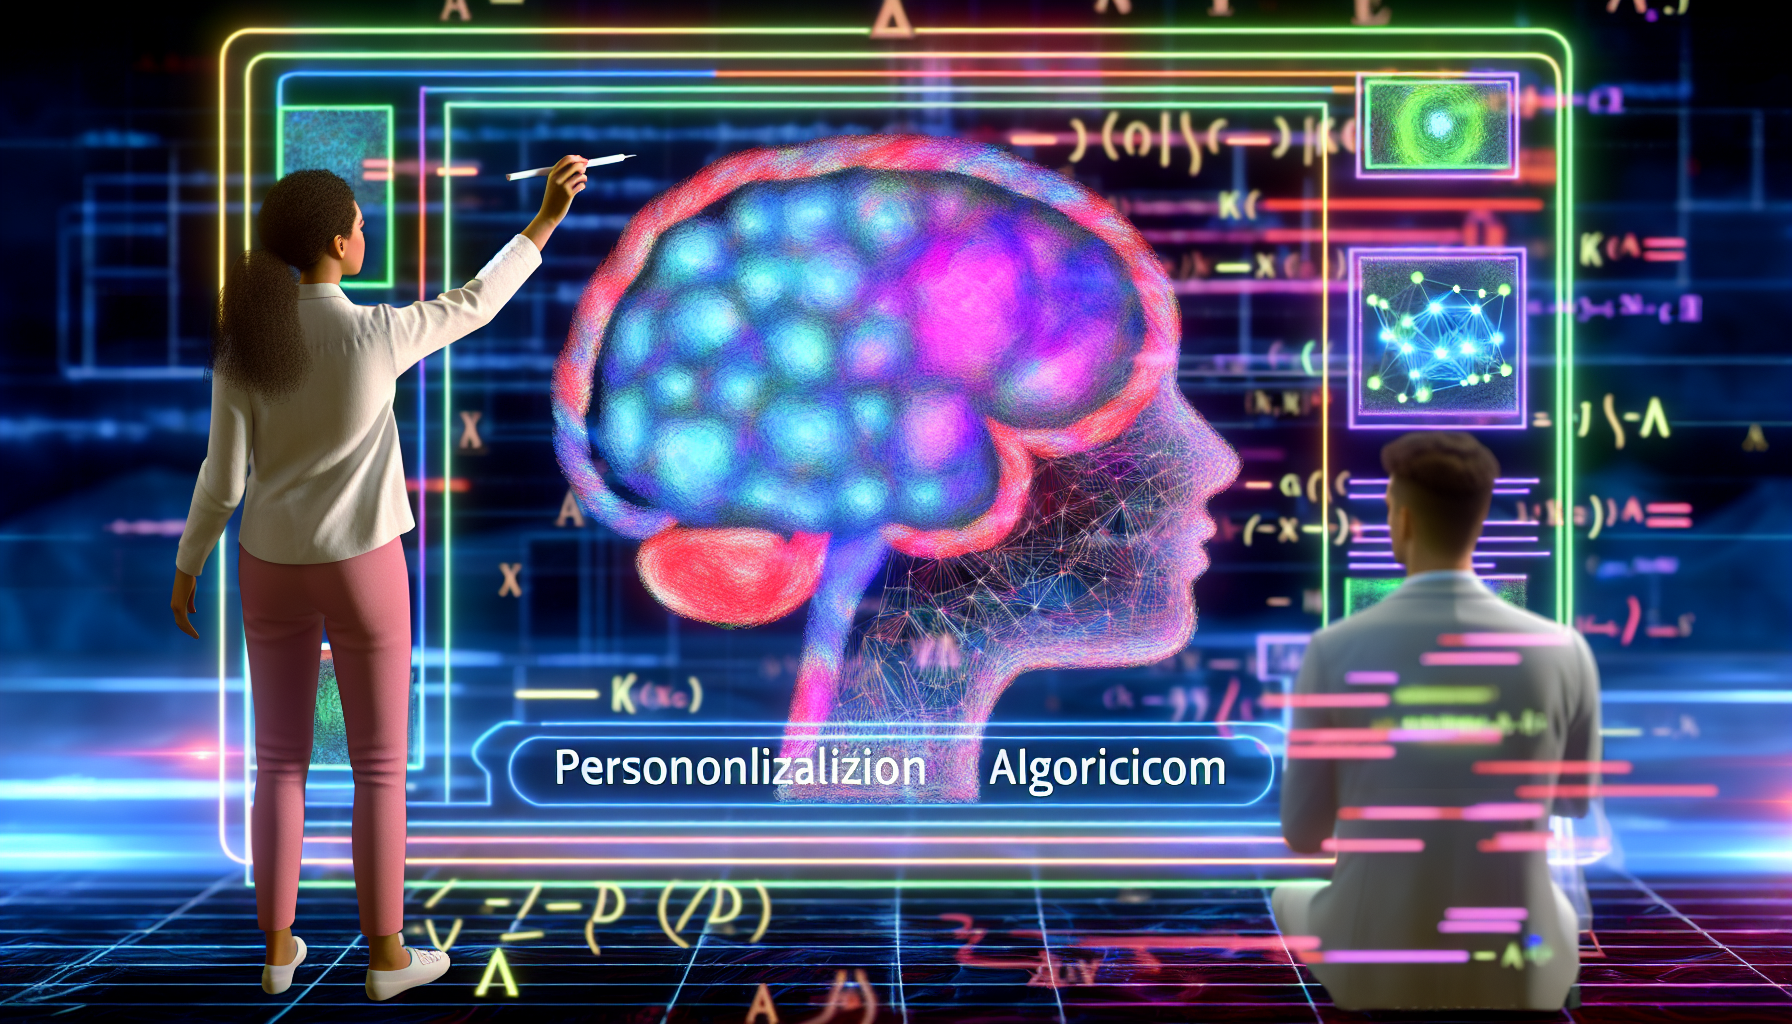 AI Personalization Algorithms at Work